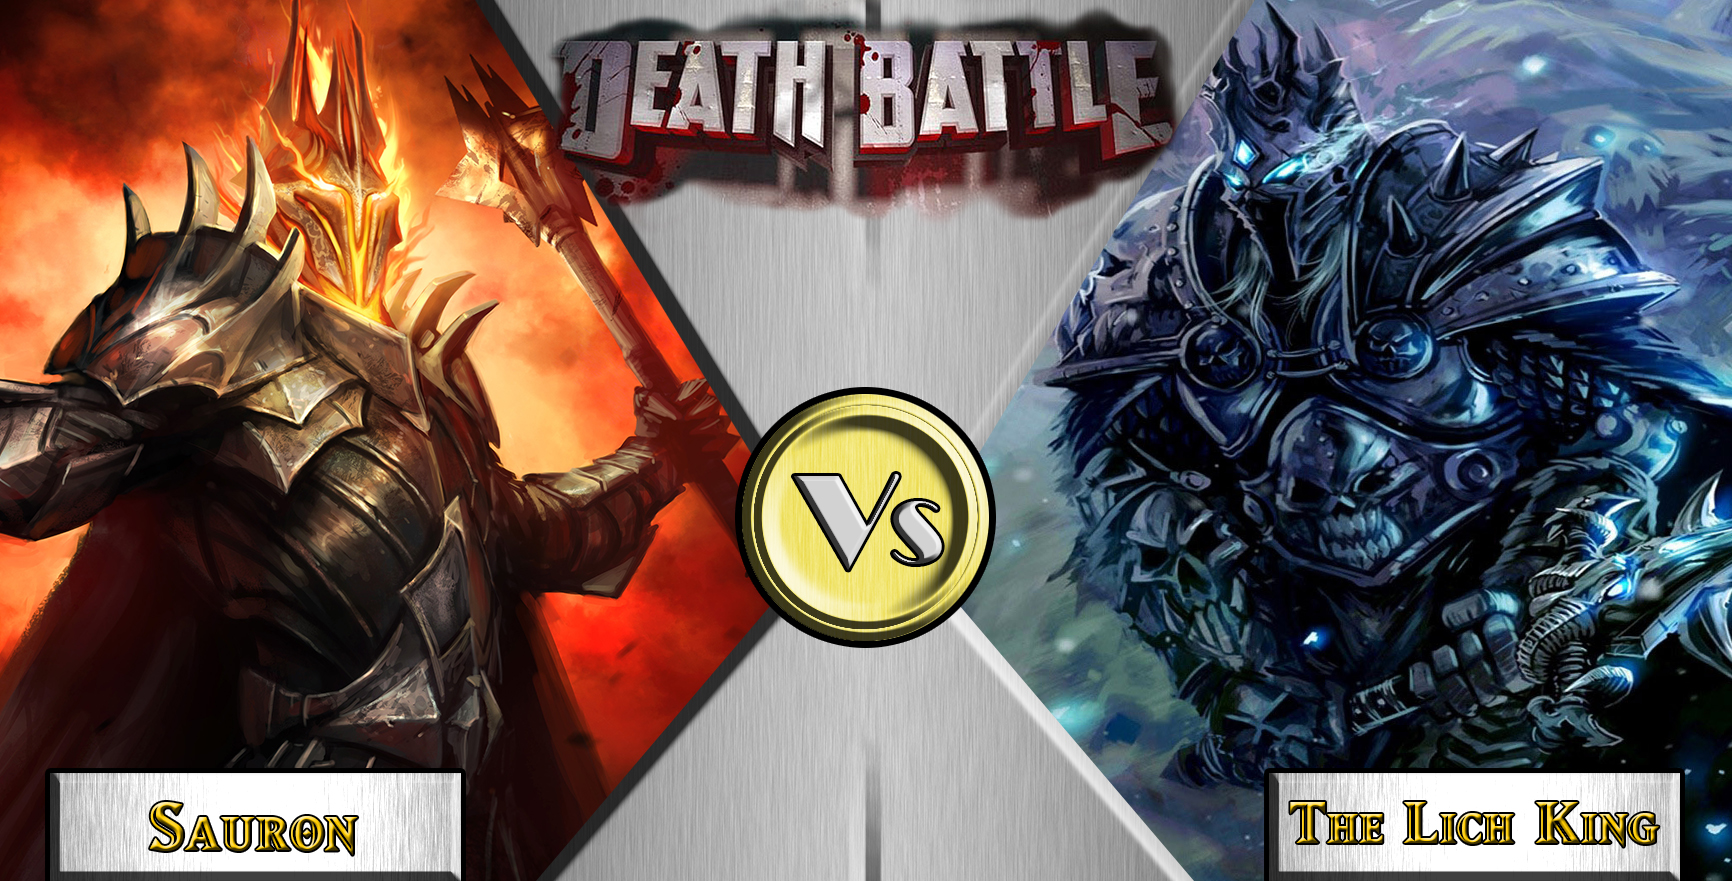 battle idea 6 sauron vs the lich king by clannadat.